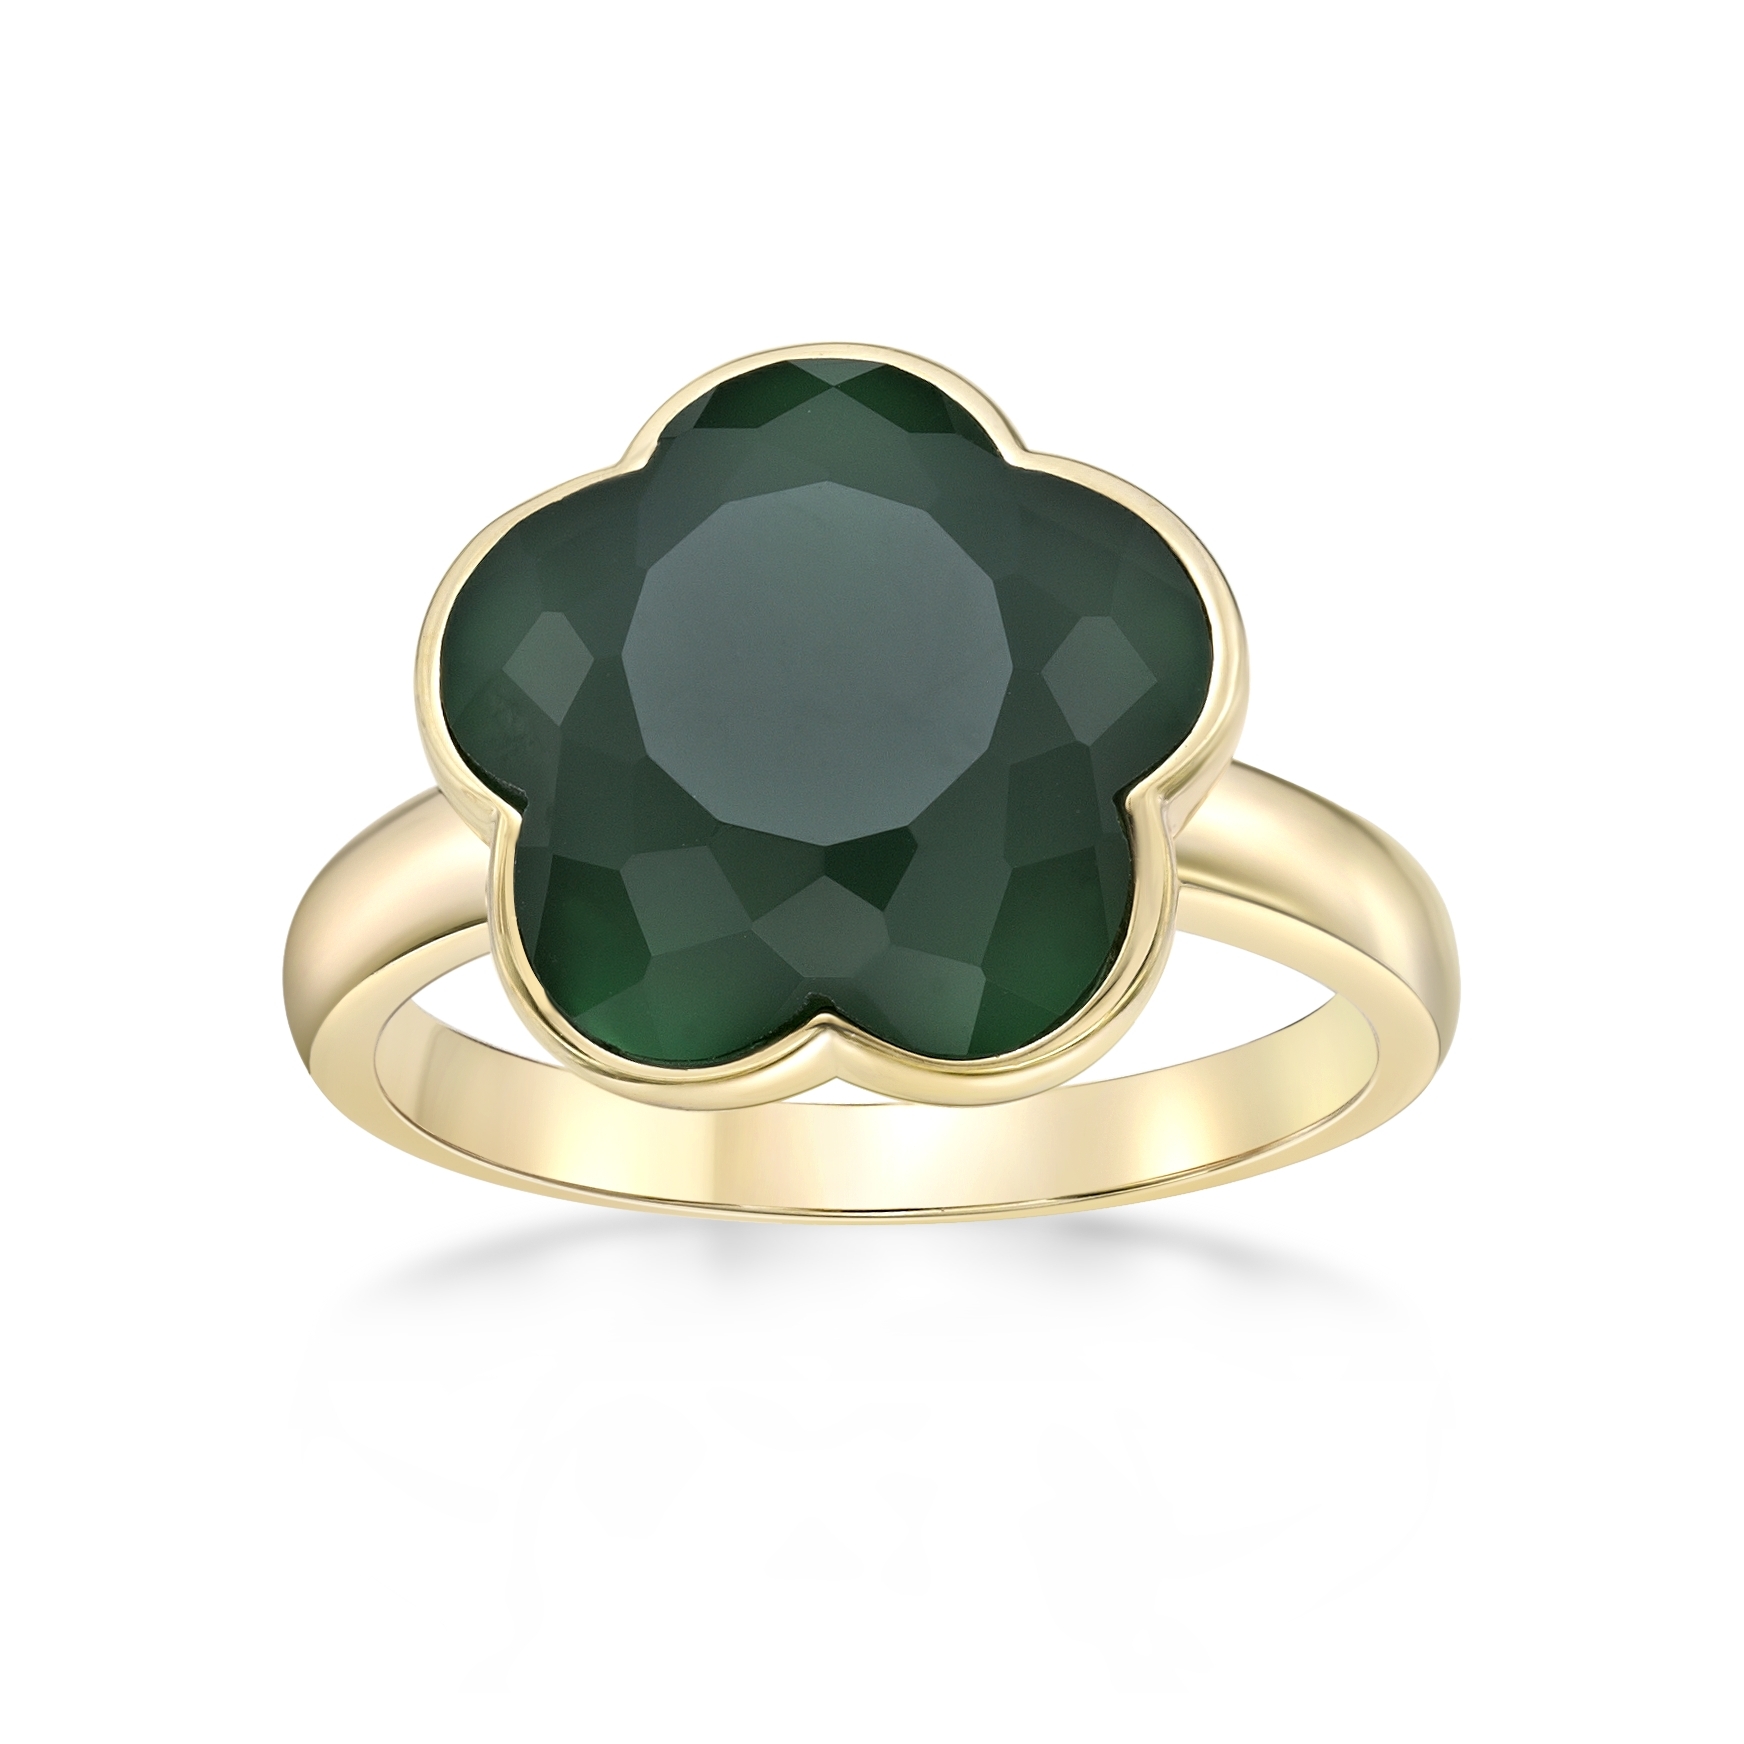 Lavari Jewelers Women’s Green Onyx Five Petal Flower Ring, 925 Sterling Silver, Size 6